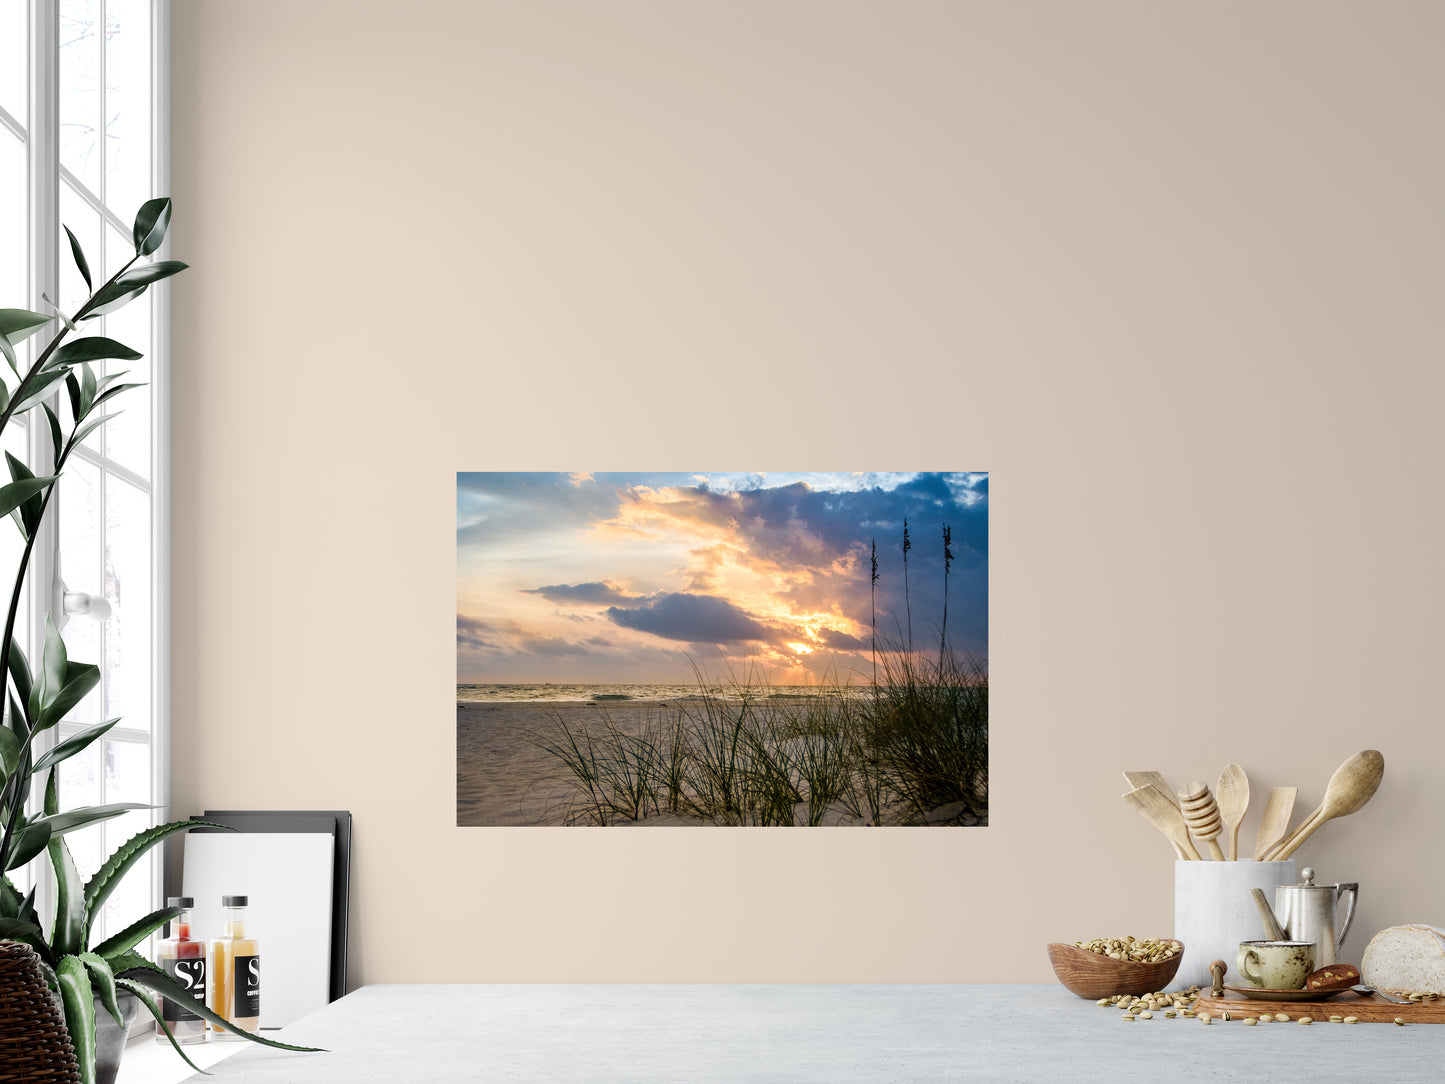 24X36 Beach Poster: Peaceful Cloudy Sunset on Beach - Coastal / Seascape / Nature / Landscape Photograph Loose / Unframed / Frameless / Frameable Wall Art Print - Artwork